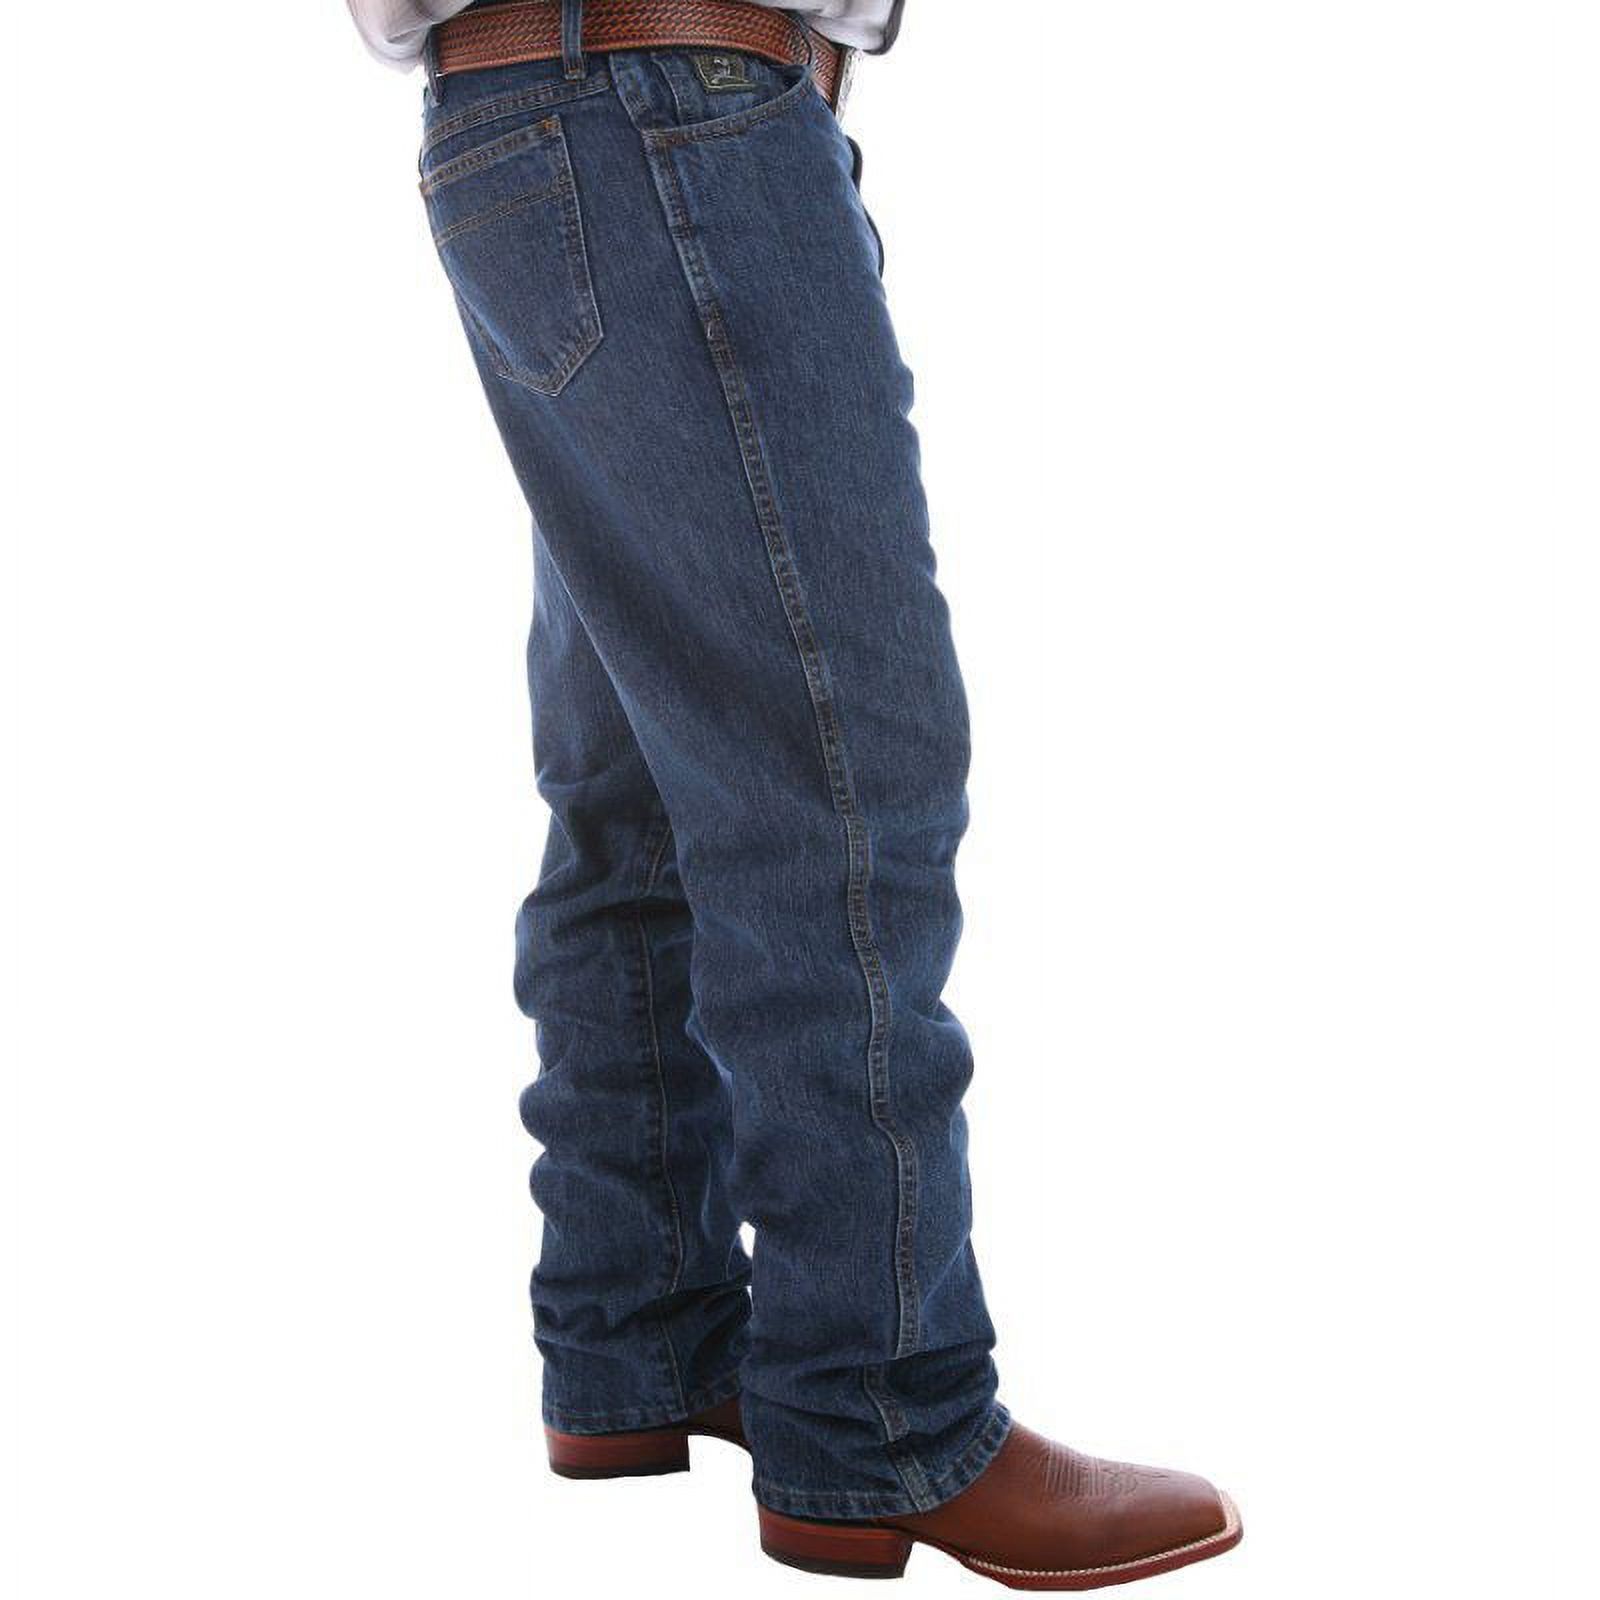 Cinch Apparel Mens Green Label Original Fit Jeans 35x30 Dark Stonewash - image 2 of 4